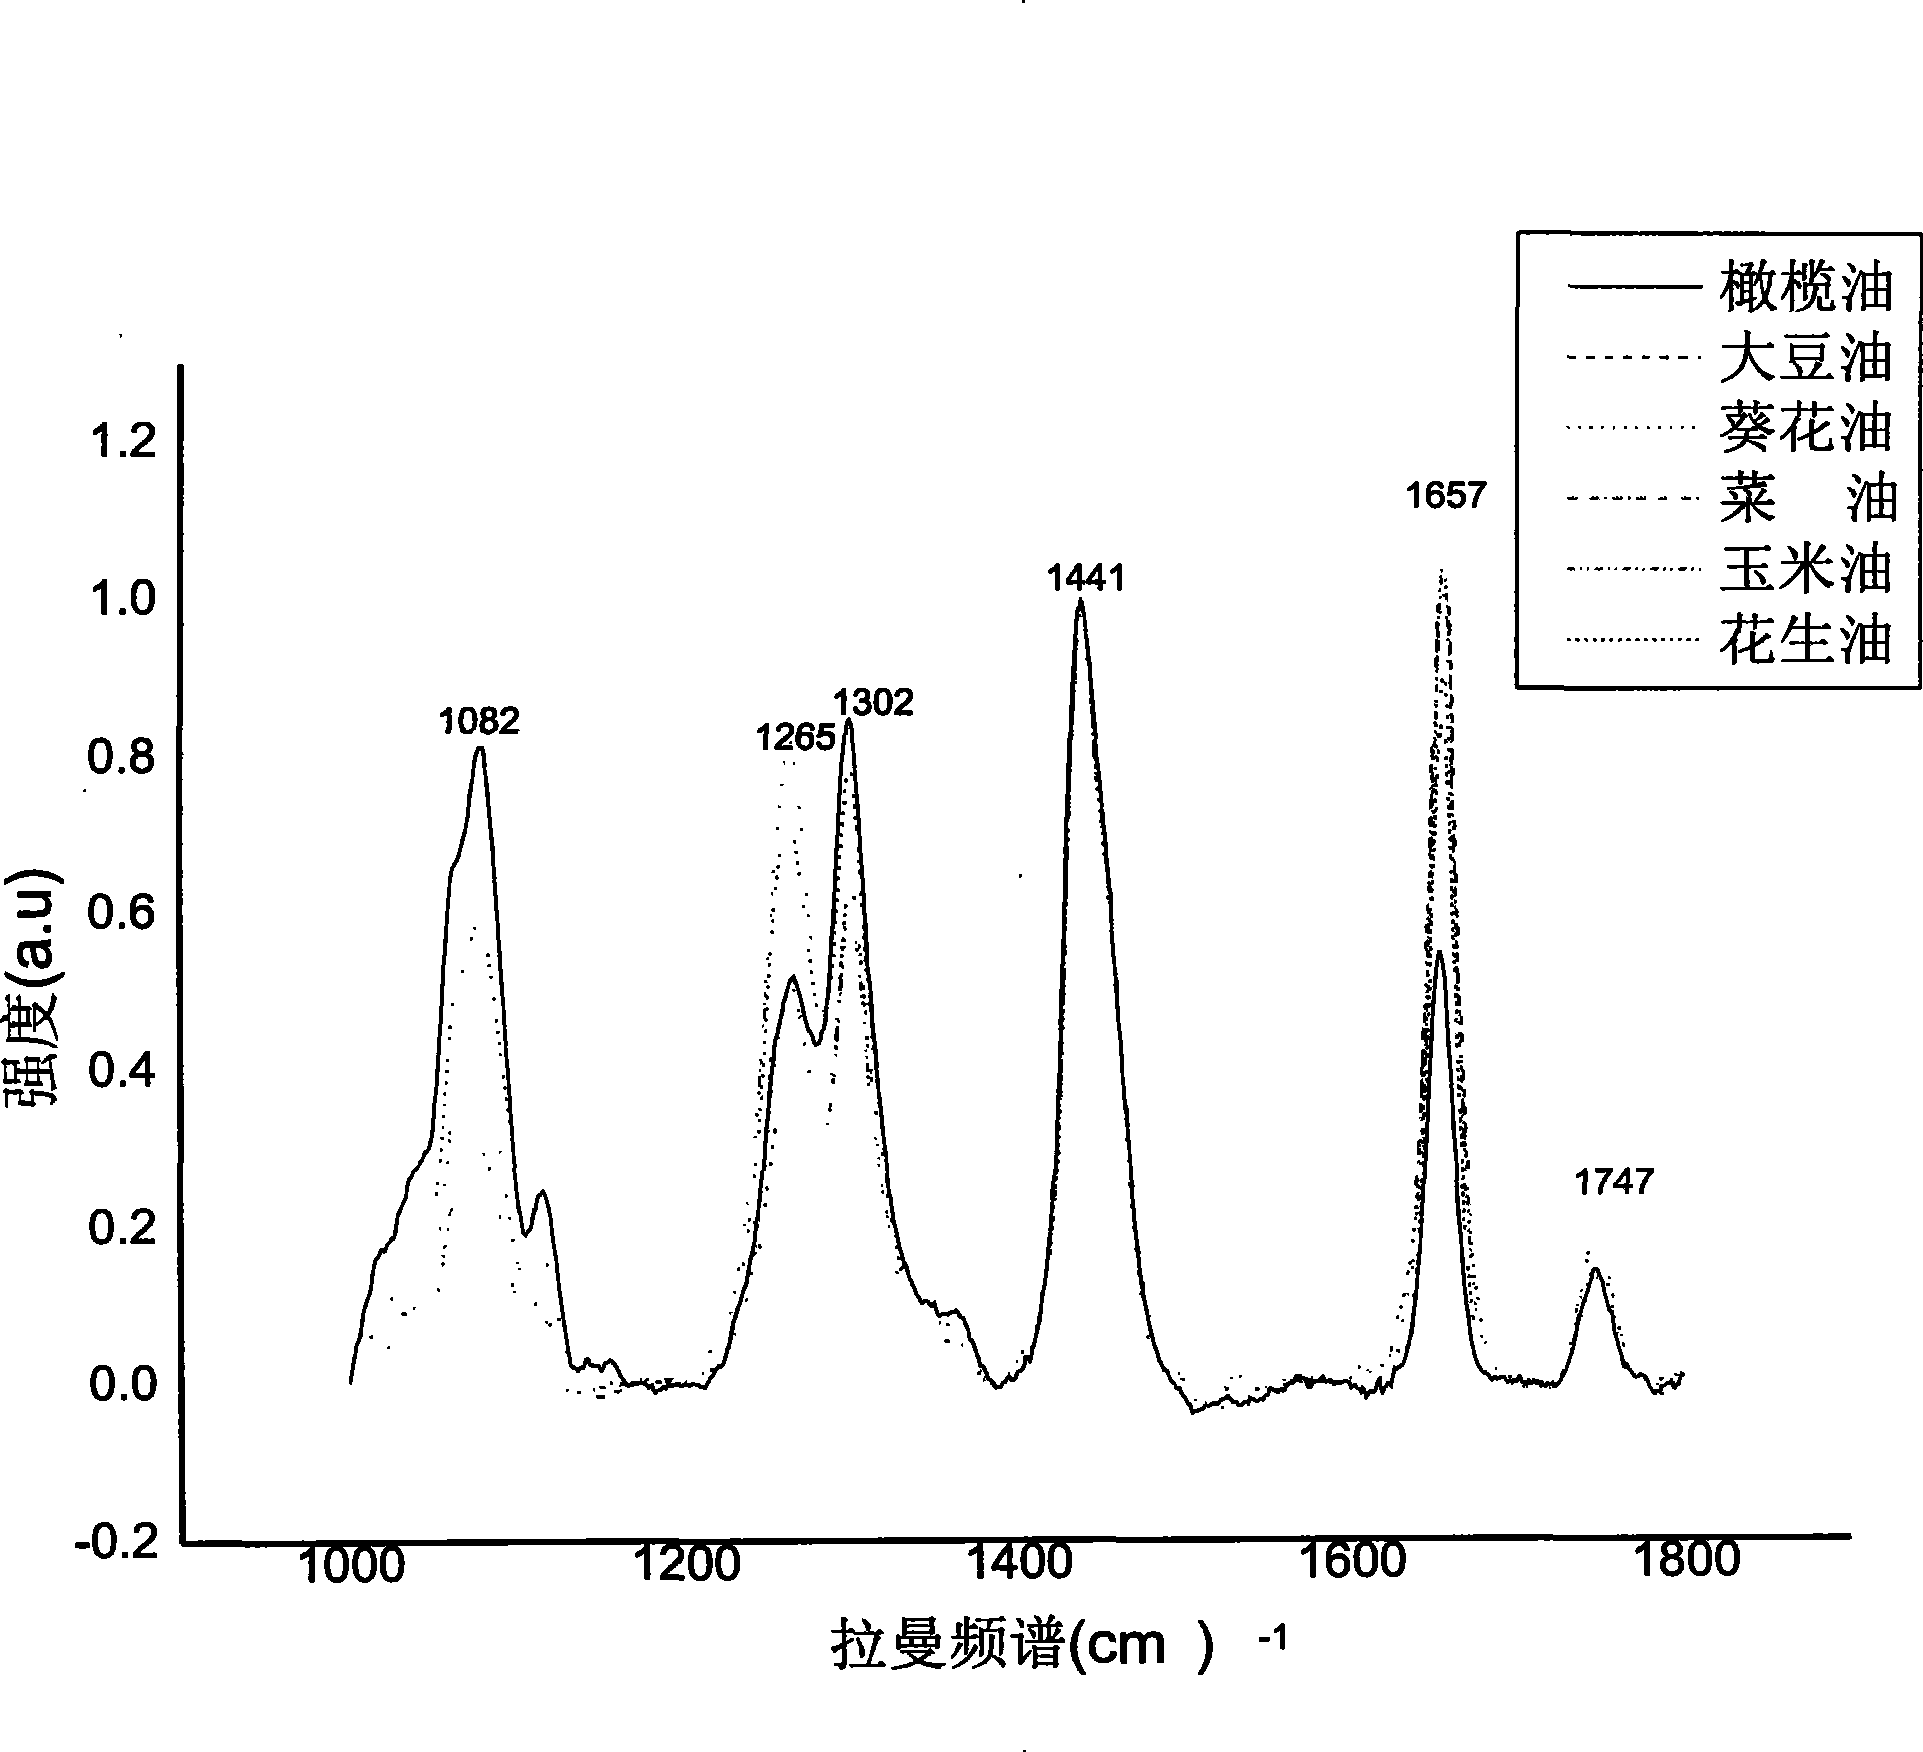 Olive oil fast detection method adopting Raman spectrum characteristic peak signal intensity ratio